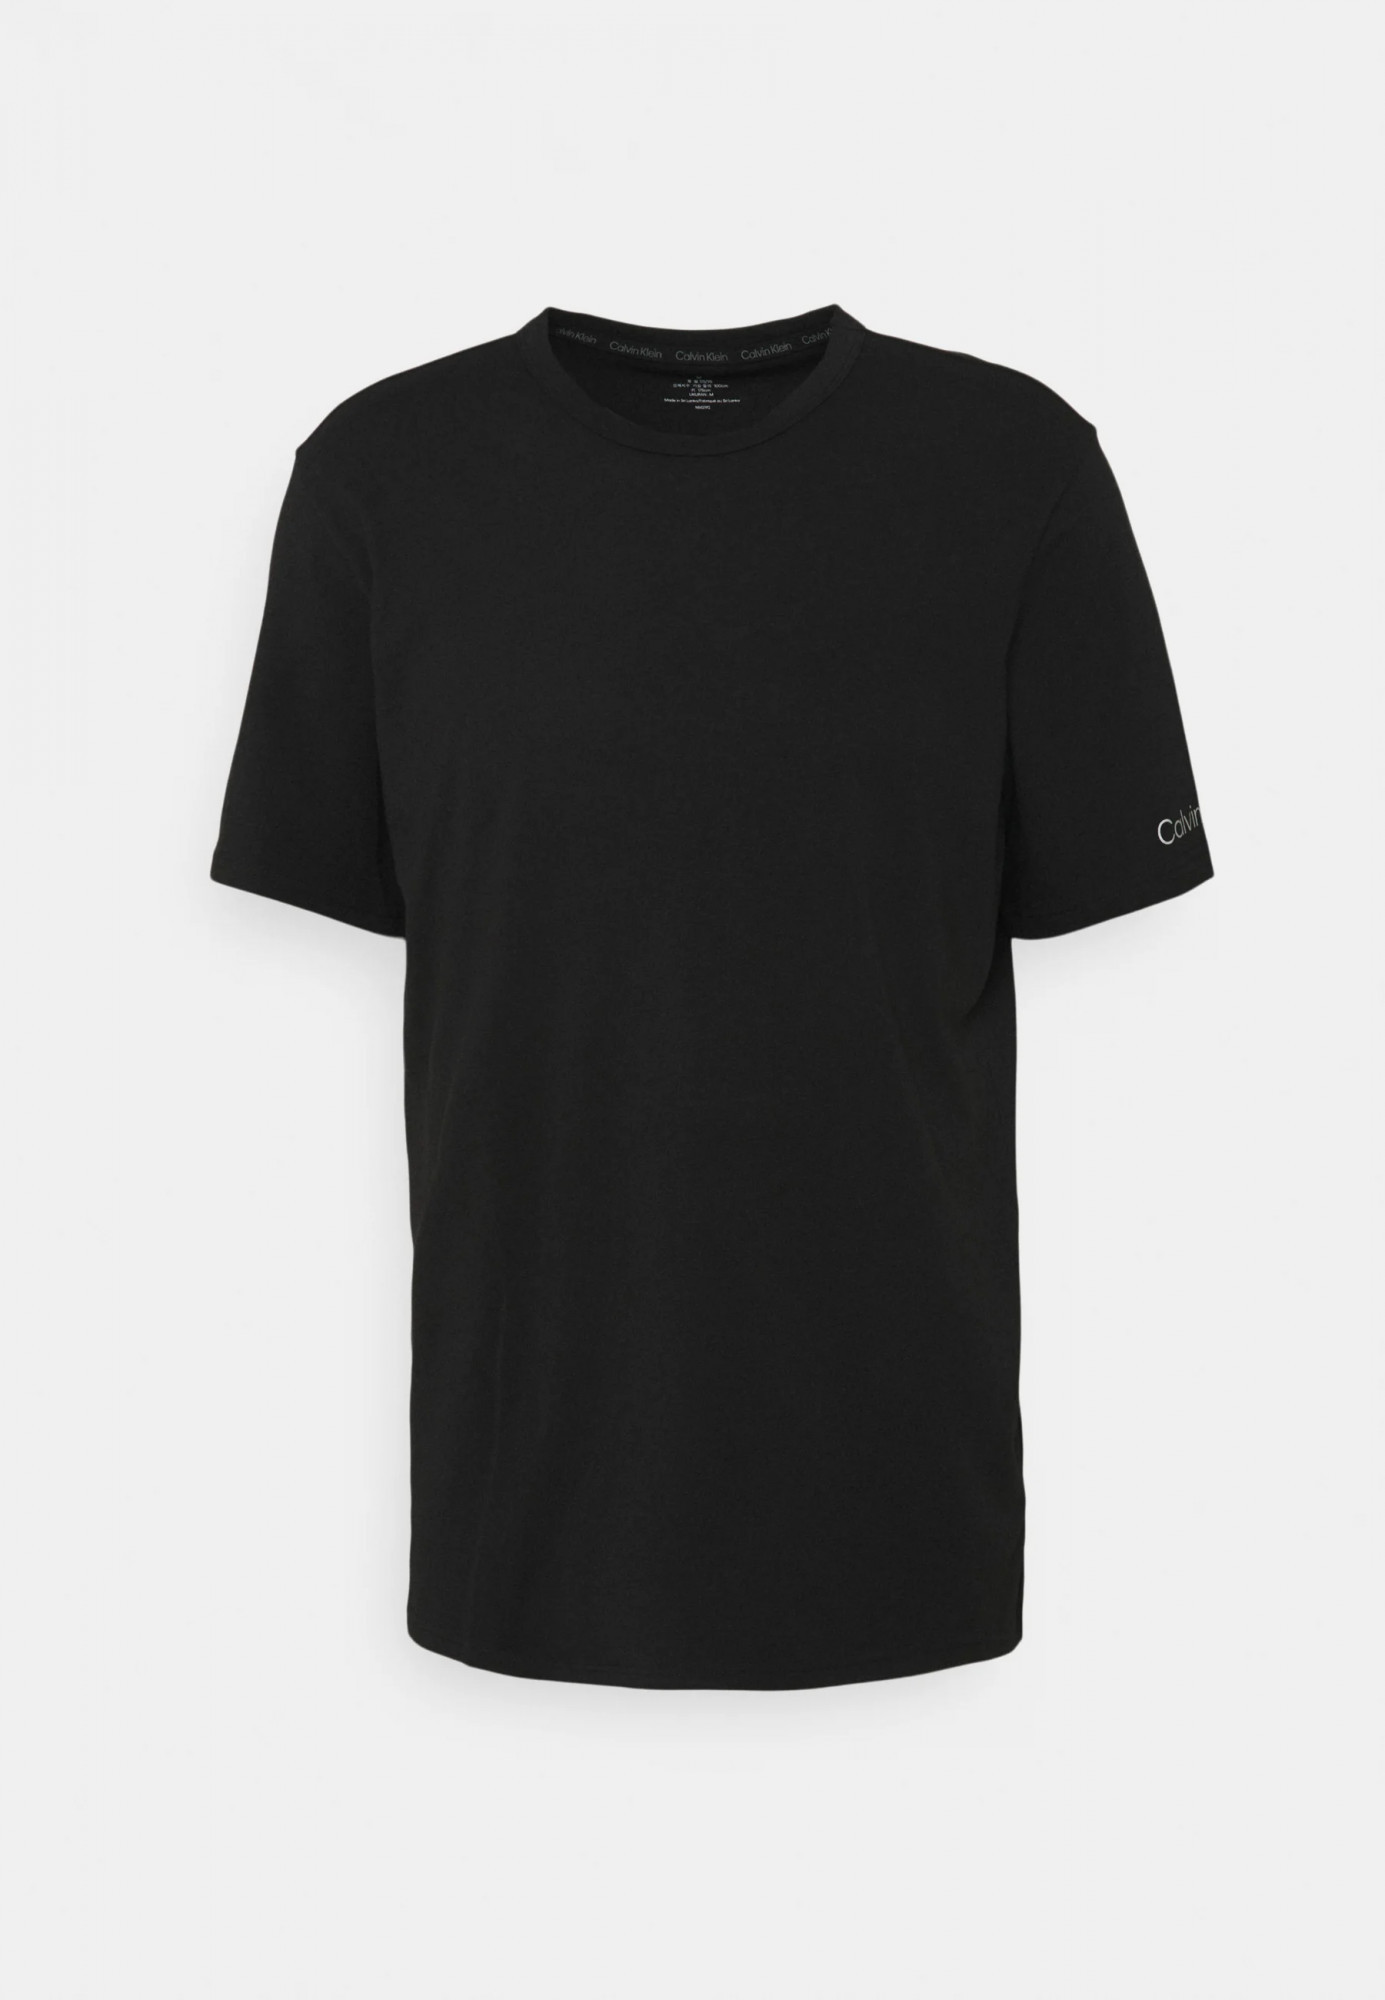 Pánské tričko UB1 černá černá XL model 15825462 - Calvin Klein